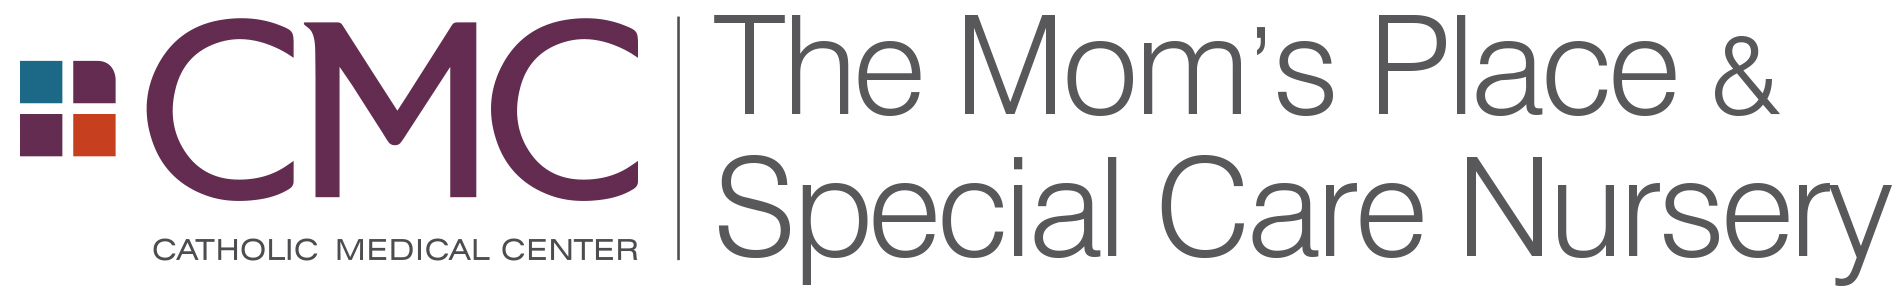 CMC logo_Moms_SCN_horz_2lines.jpg